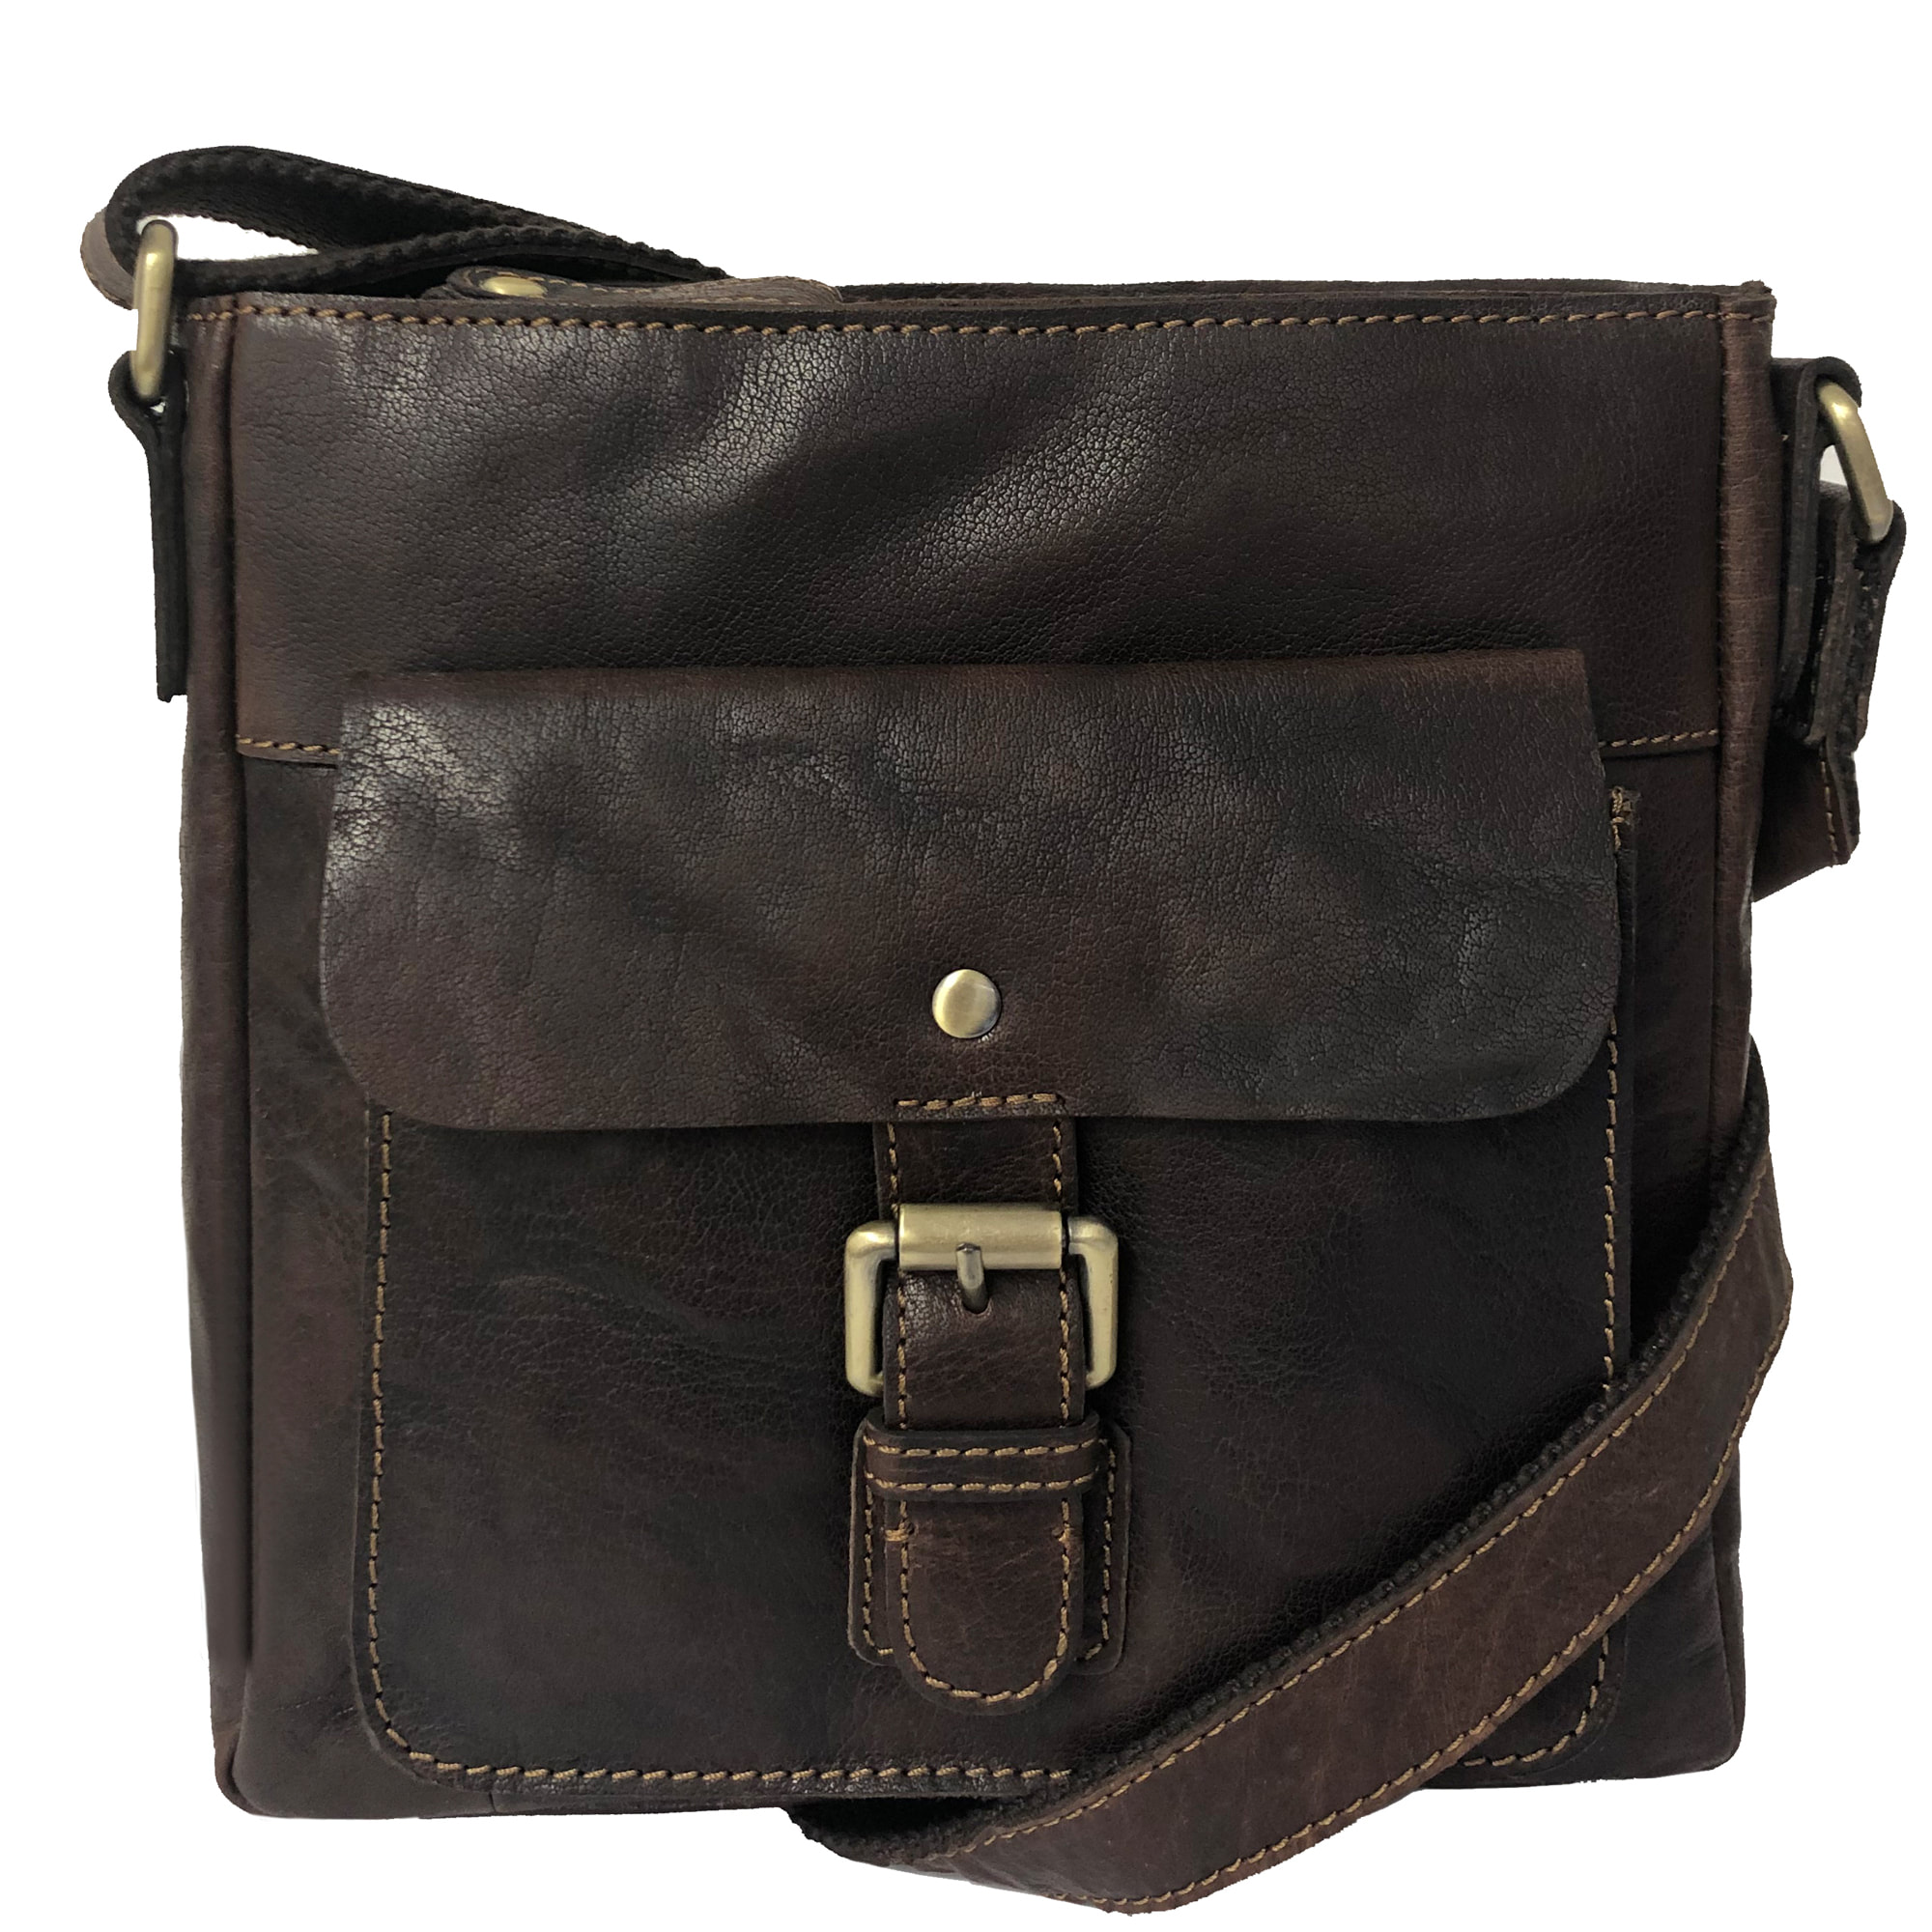 Rowallan Brown Leather Handbag, Shoulder Bag